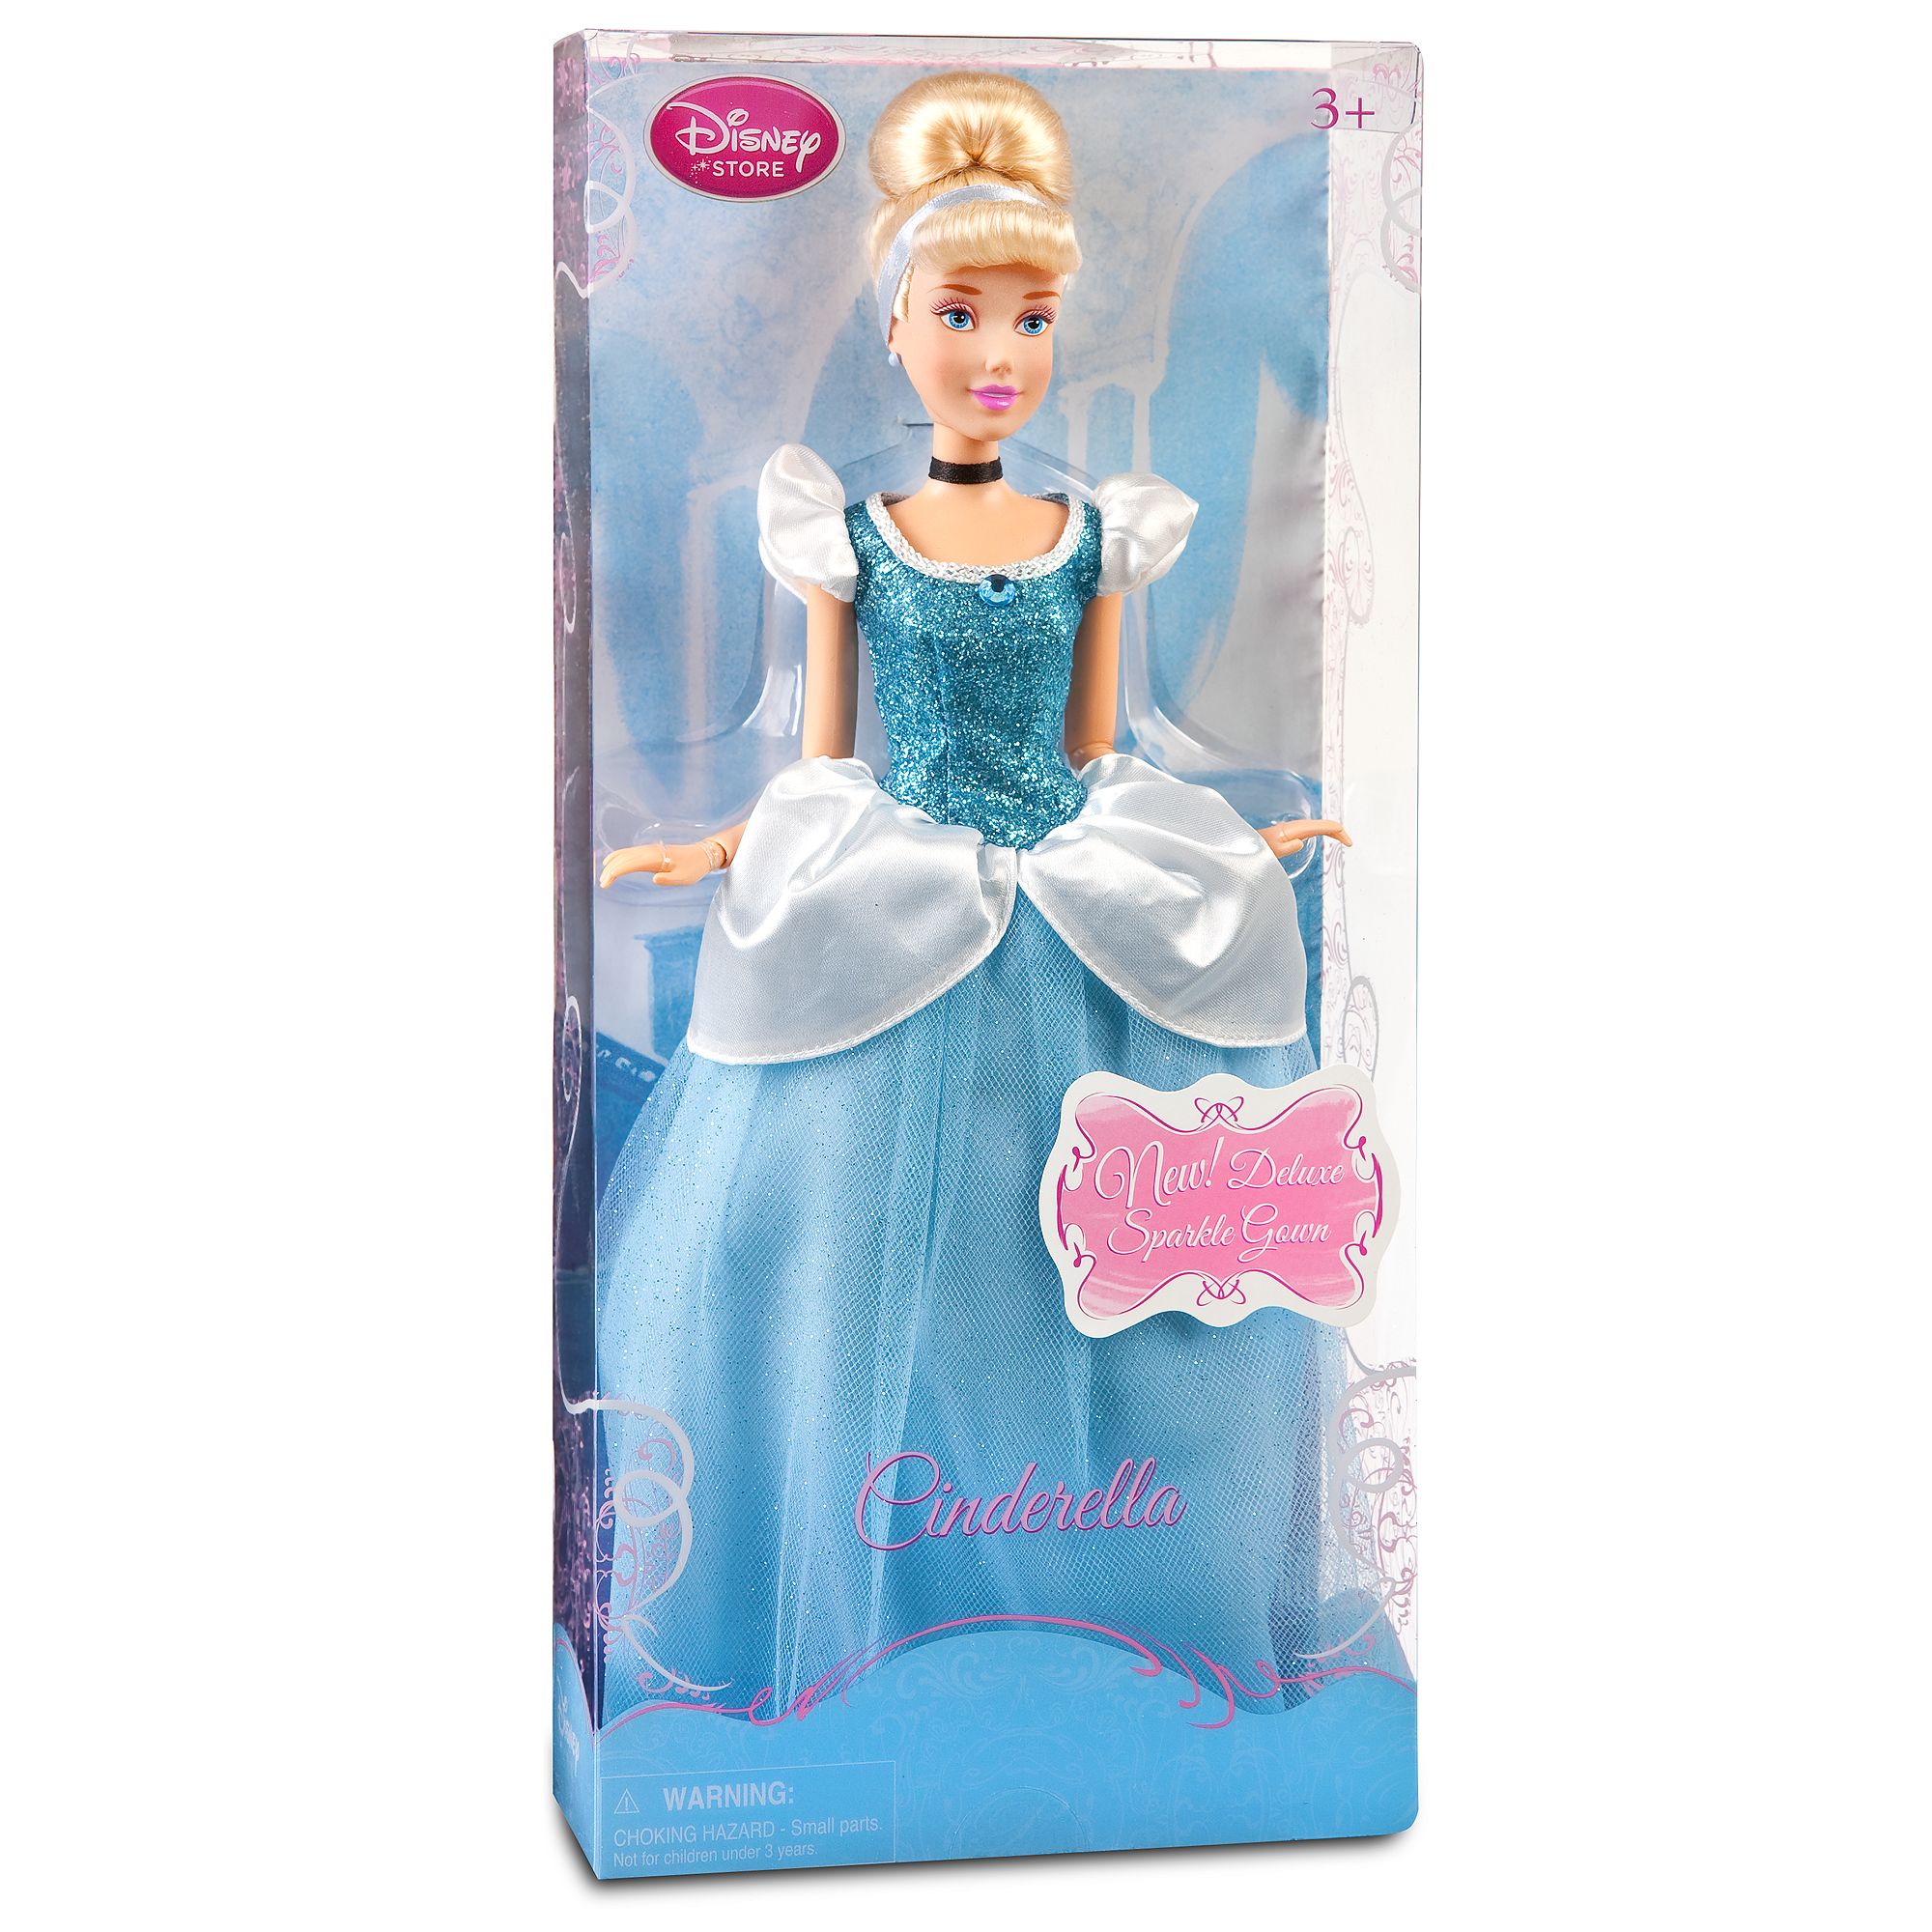 Cinderella, Disney Store Doll Database Wiki